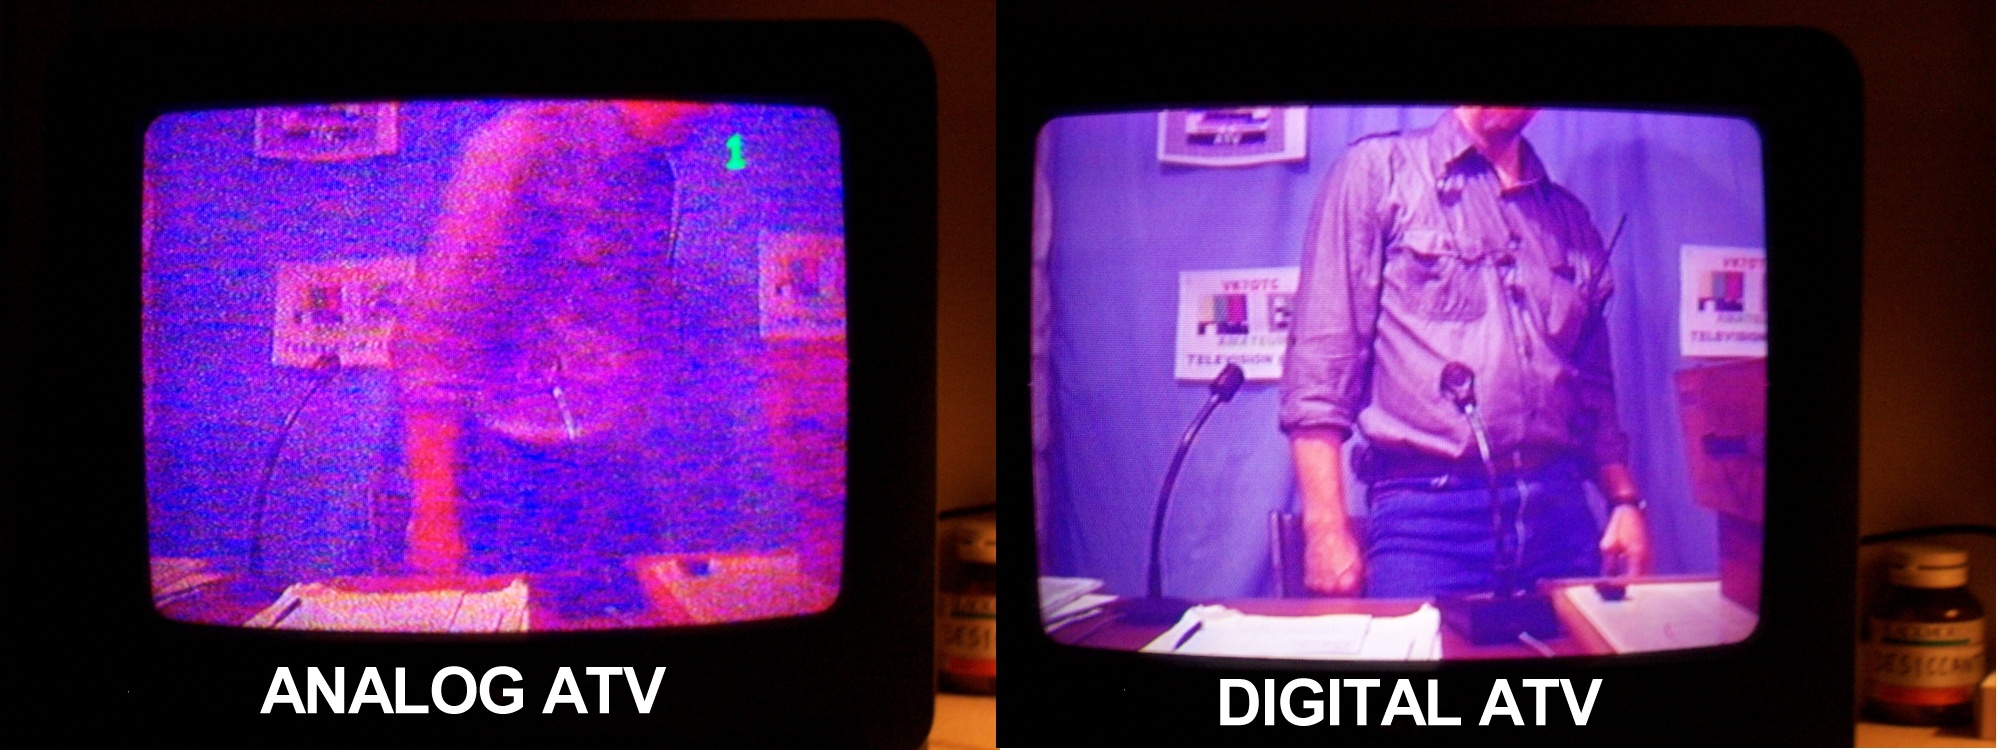 Digital Amateur Tv 90